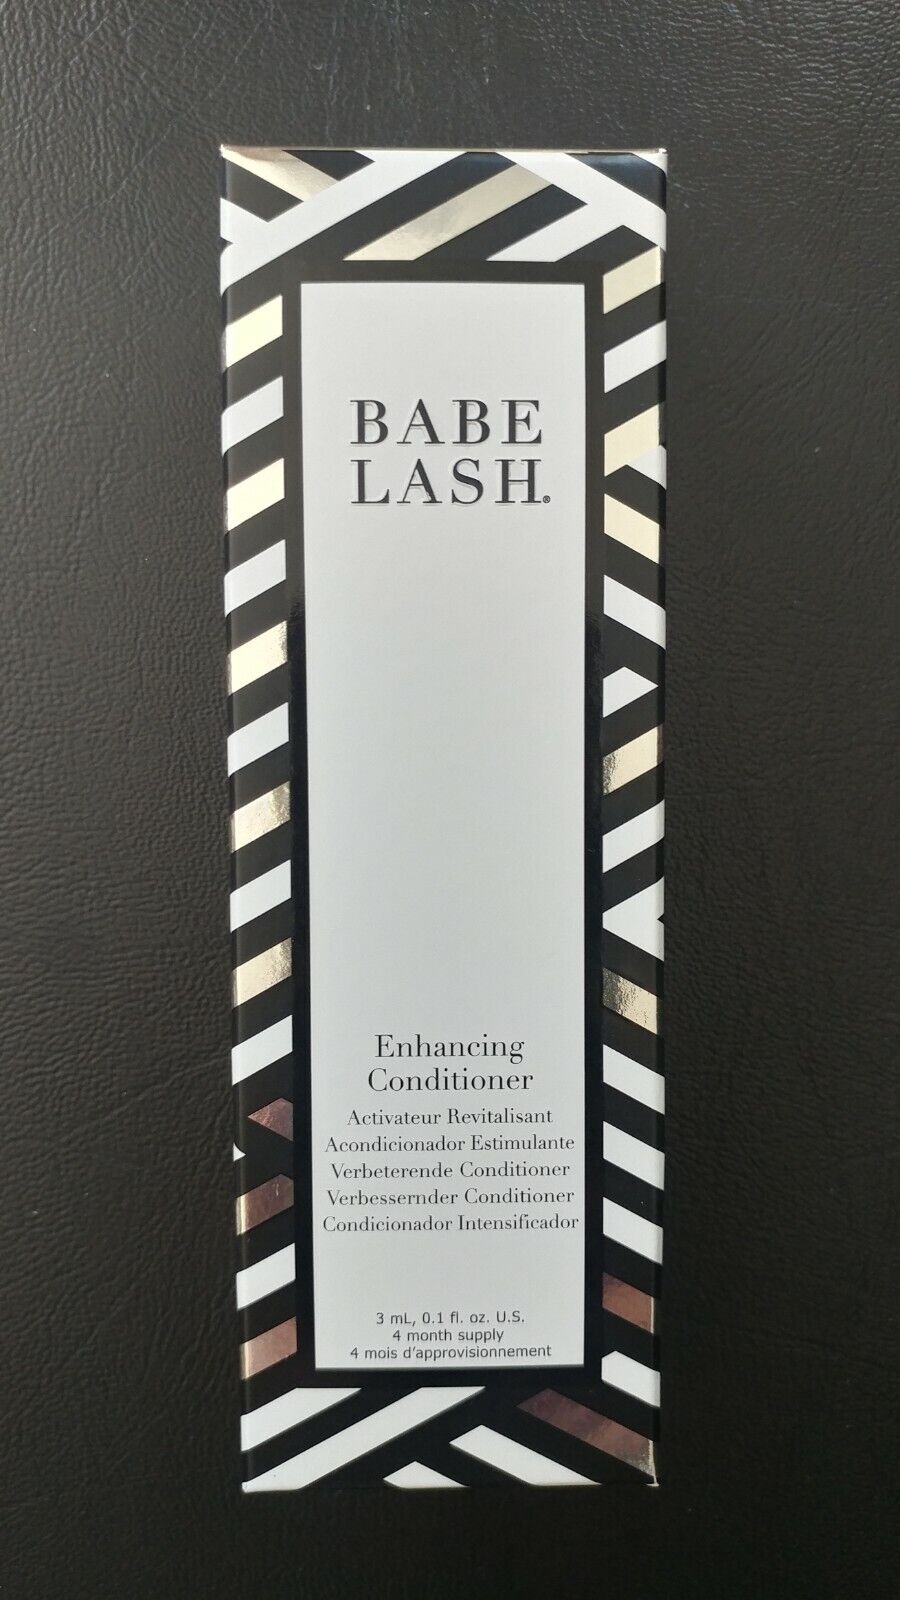 Babe Lash Enhancing Conditioner  3ml - 4 month supply - Babelash